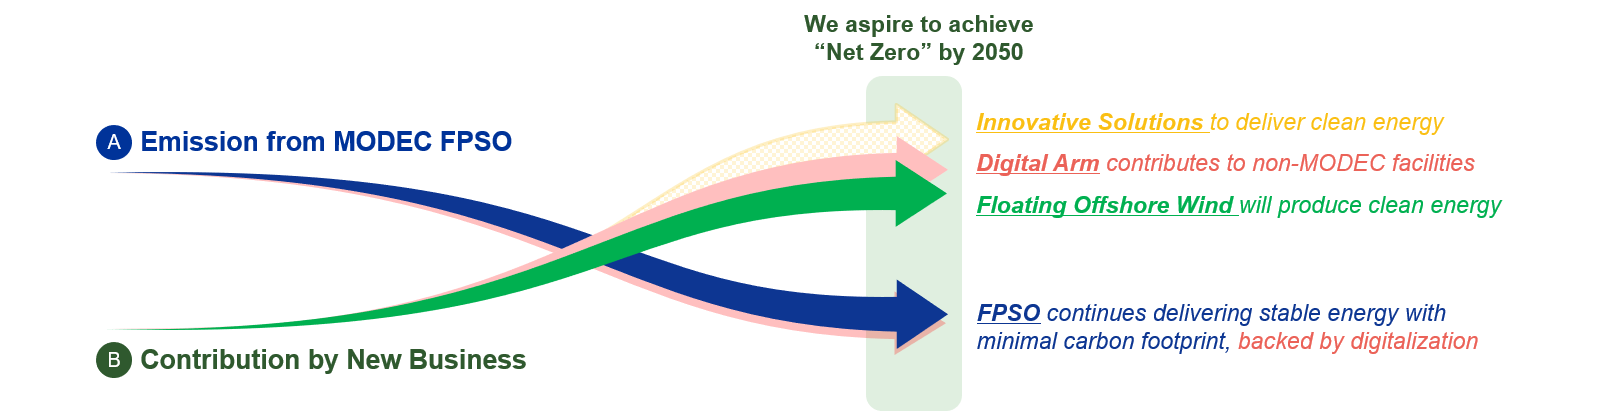 Pathway Toward Net Zero 2050